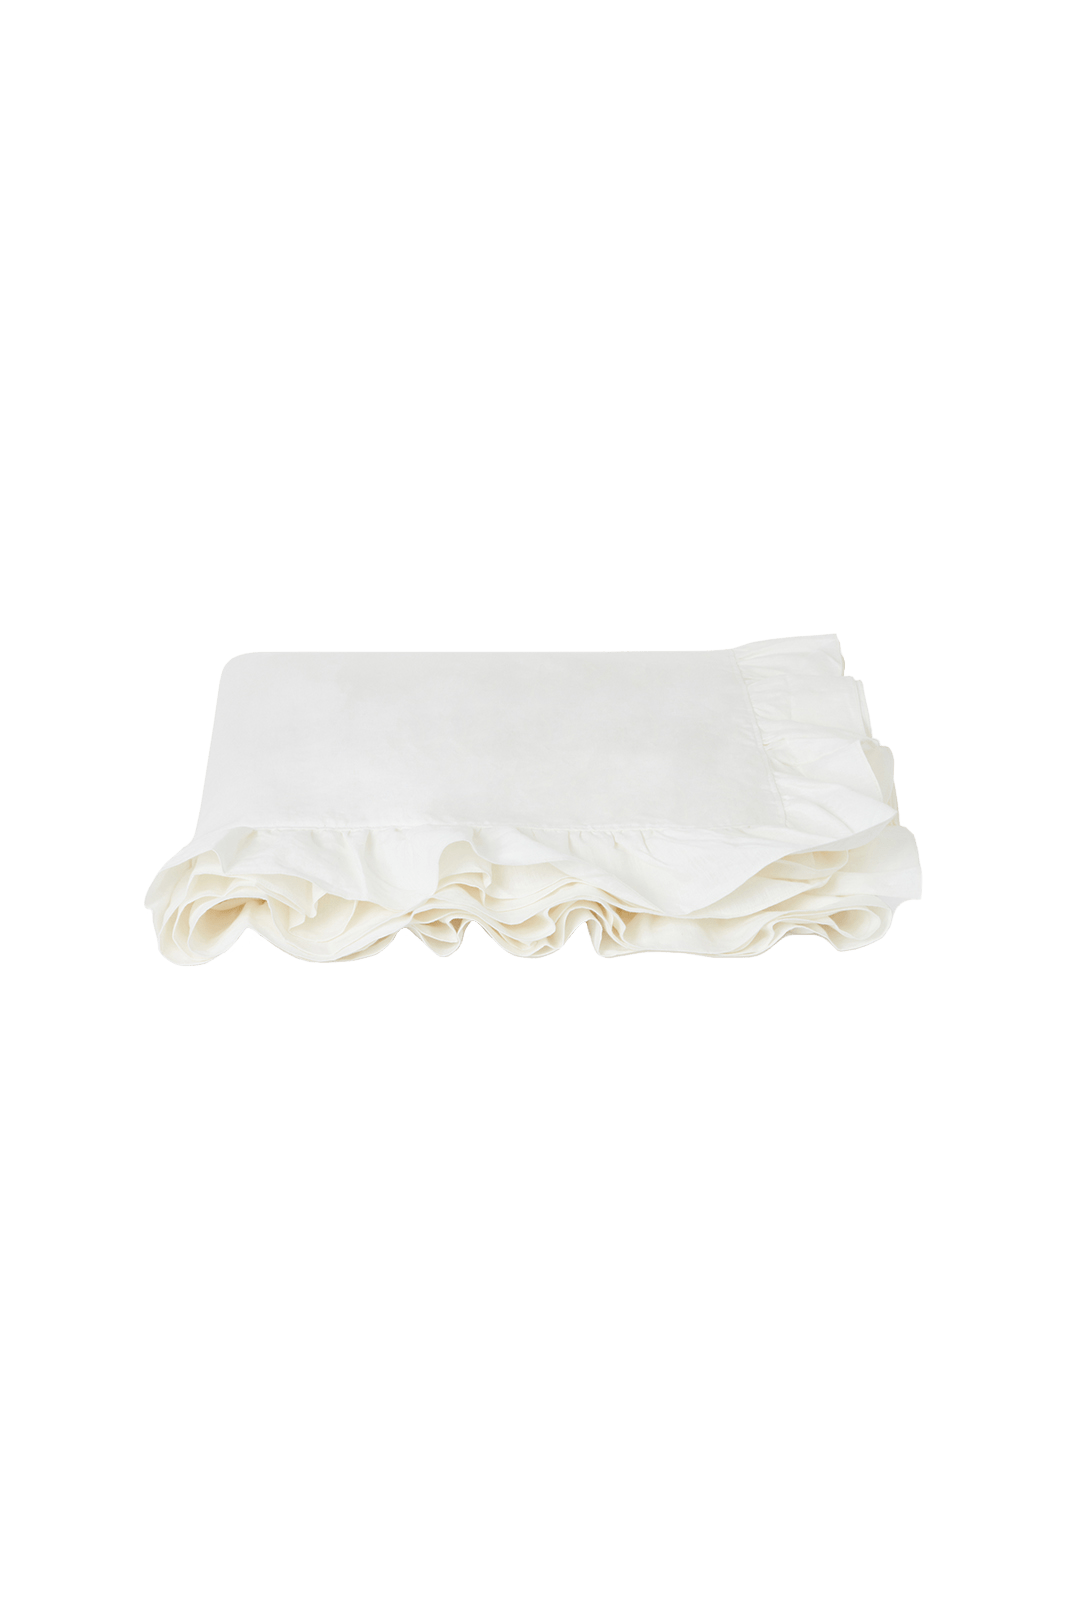 The Ruffled Casita Linen Flat Sheet in white